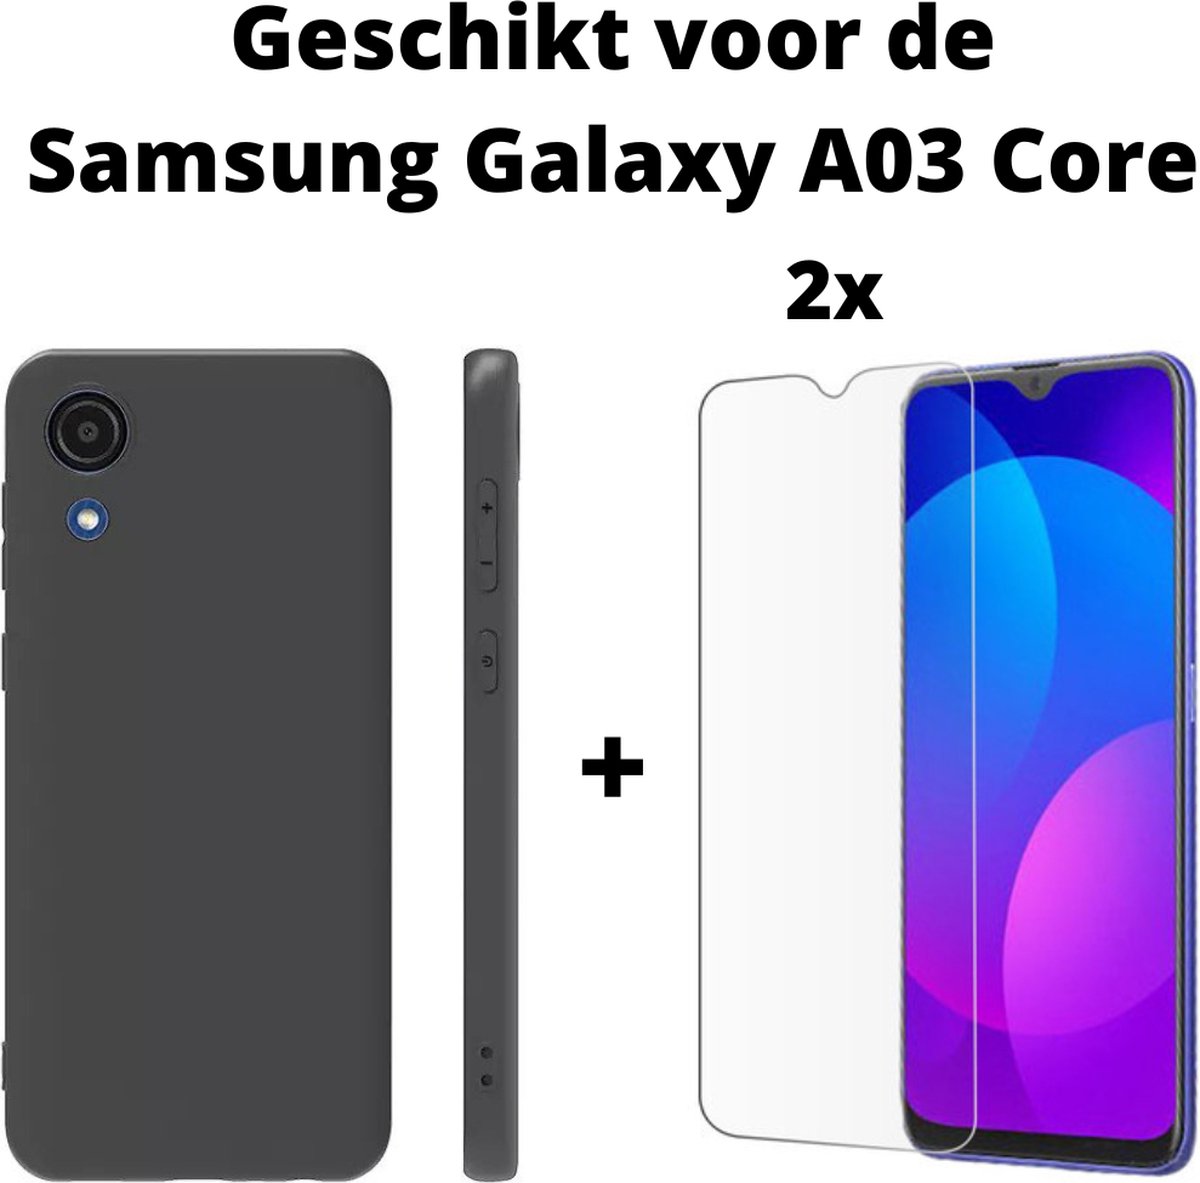 Samsung Galaxy A03 Core Achterkant Hoesje Zwart + 2x Screen Protector - galaxy a03 core tpu backcover black + scherm protectie - Samsung A03 backcase tpu zwart + tempert glas